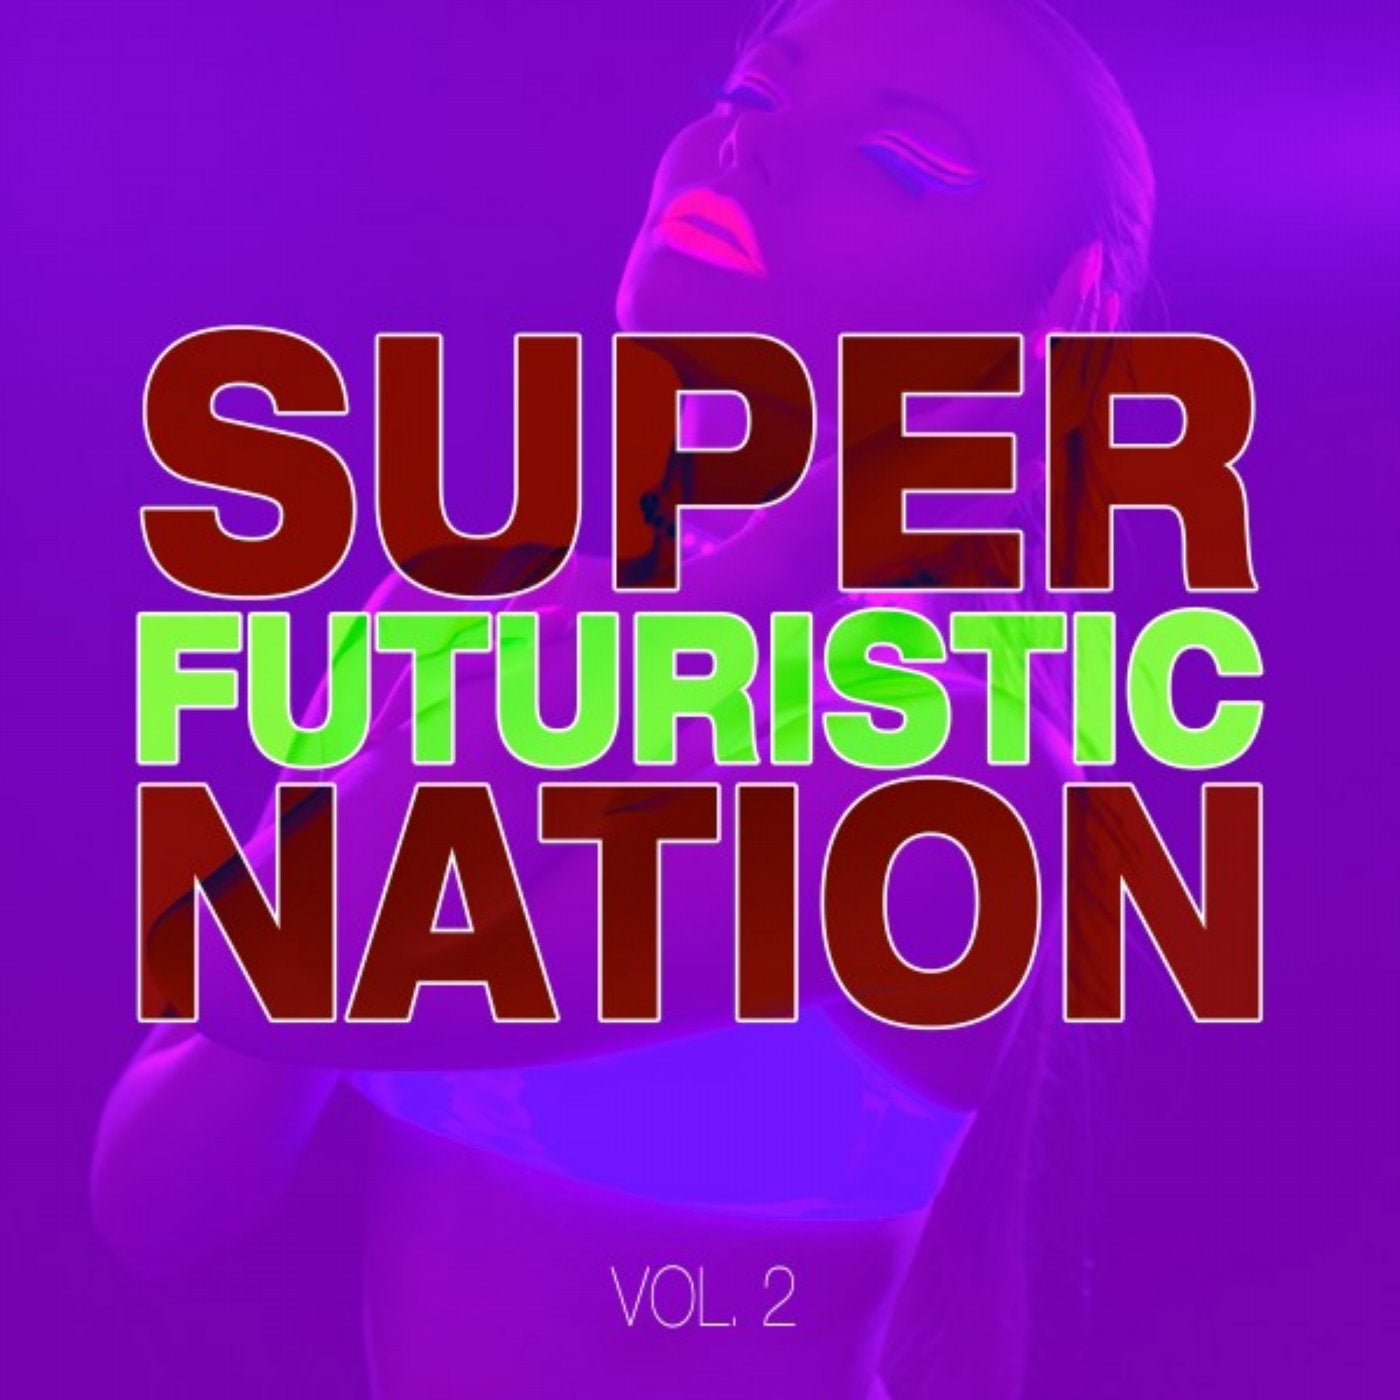 Super Futuristic Nation, Vol. 2